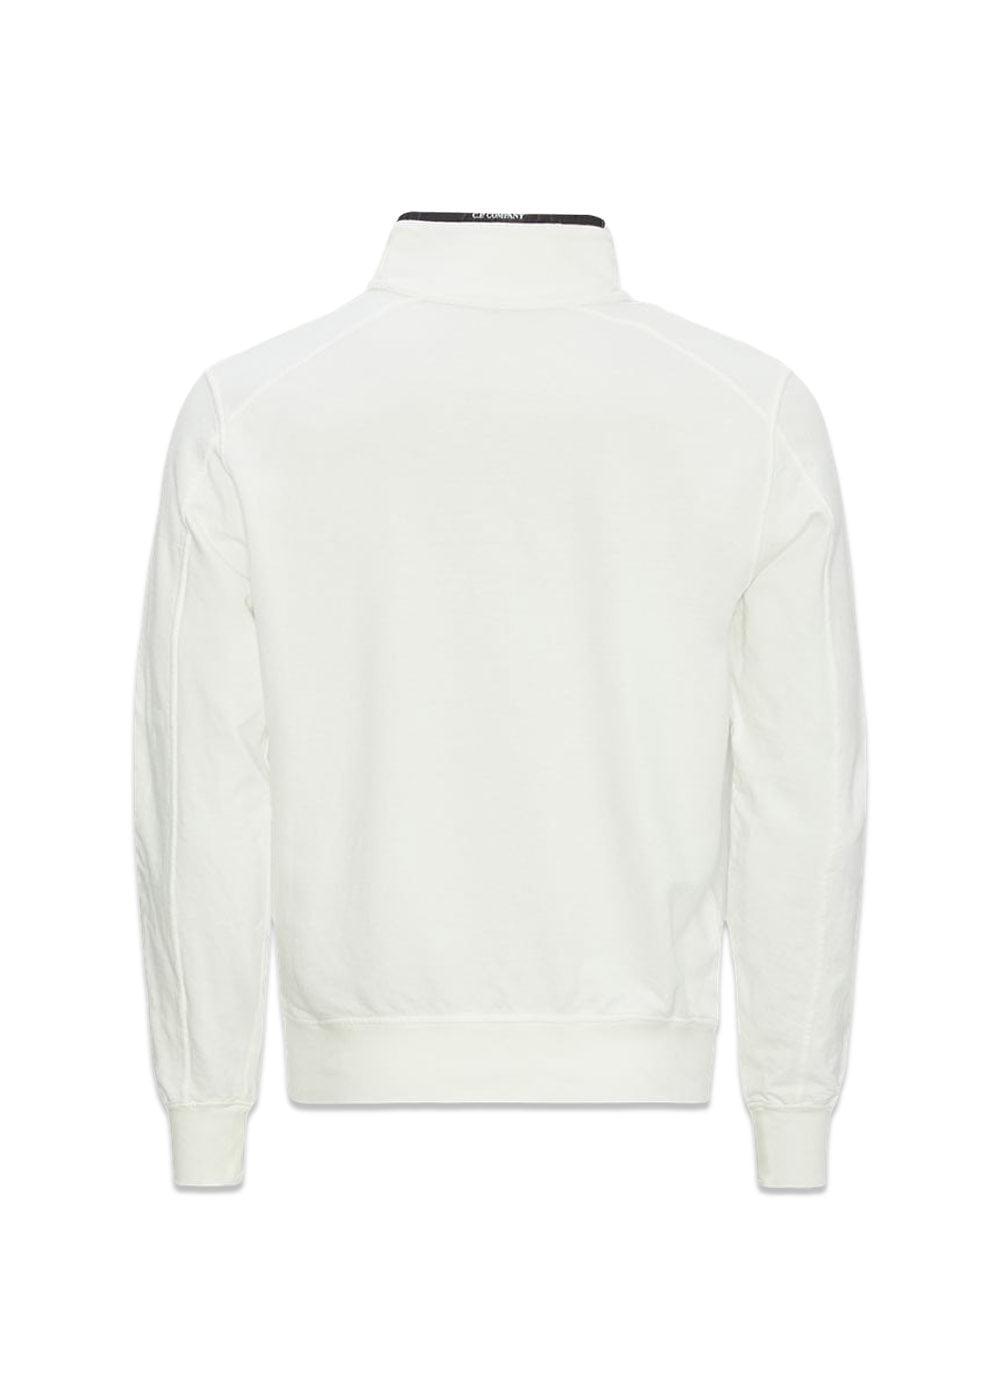 sweatshirts polo collar light fleece - White